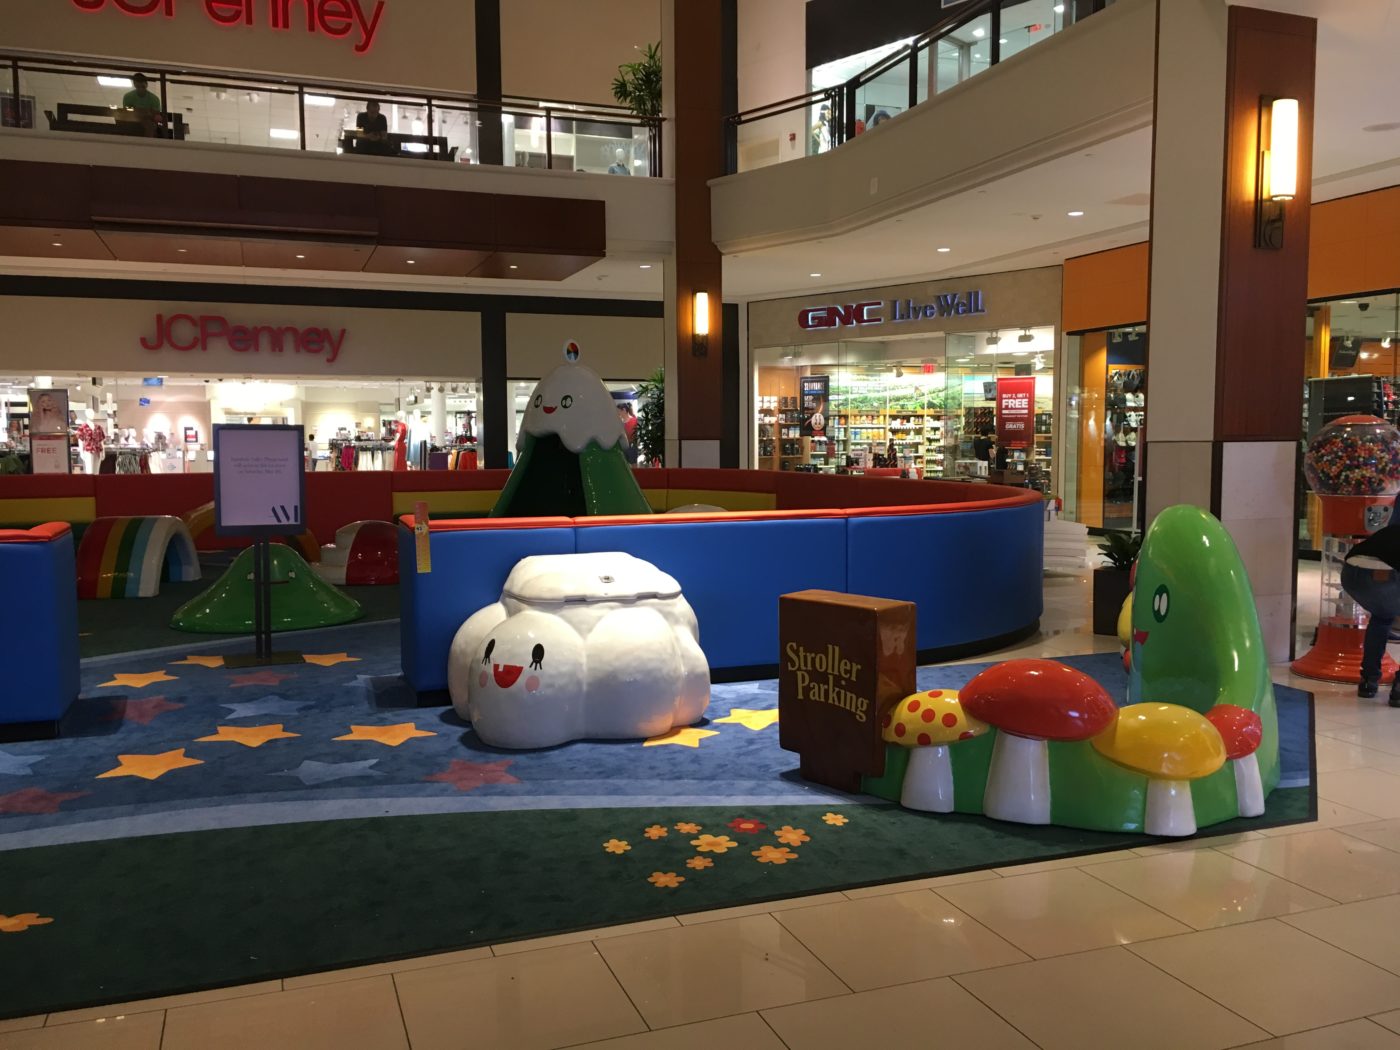 aventura mall